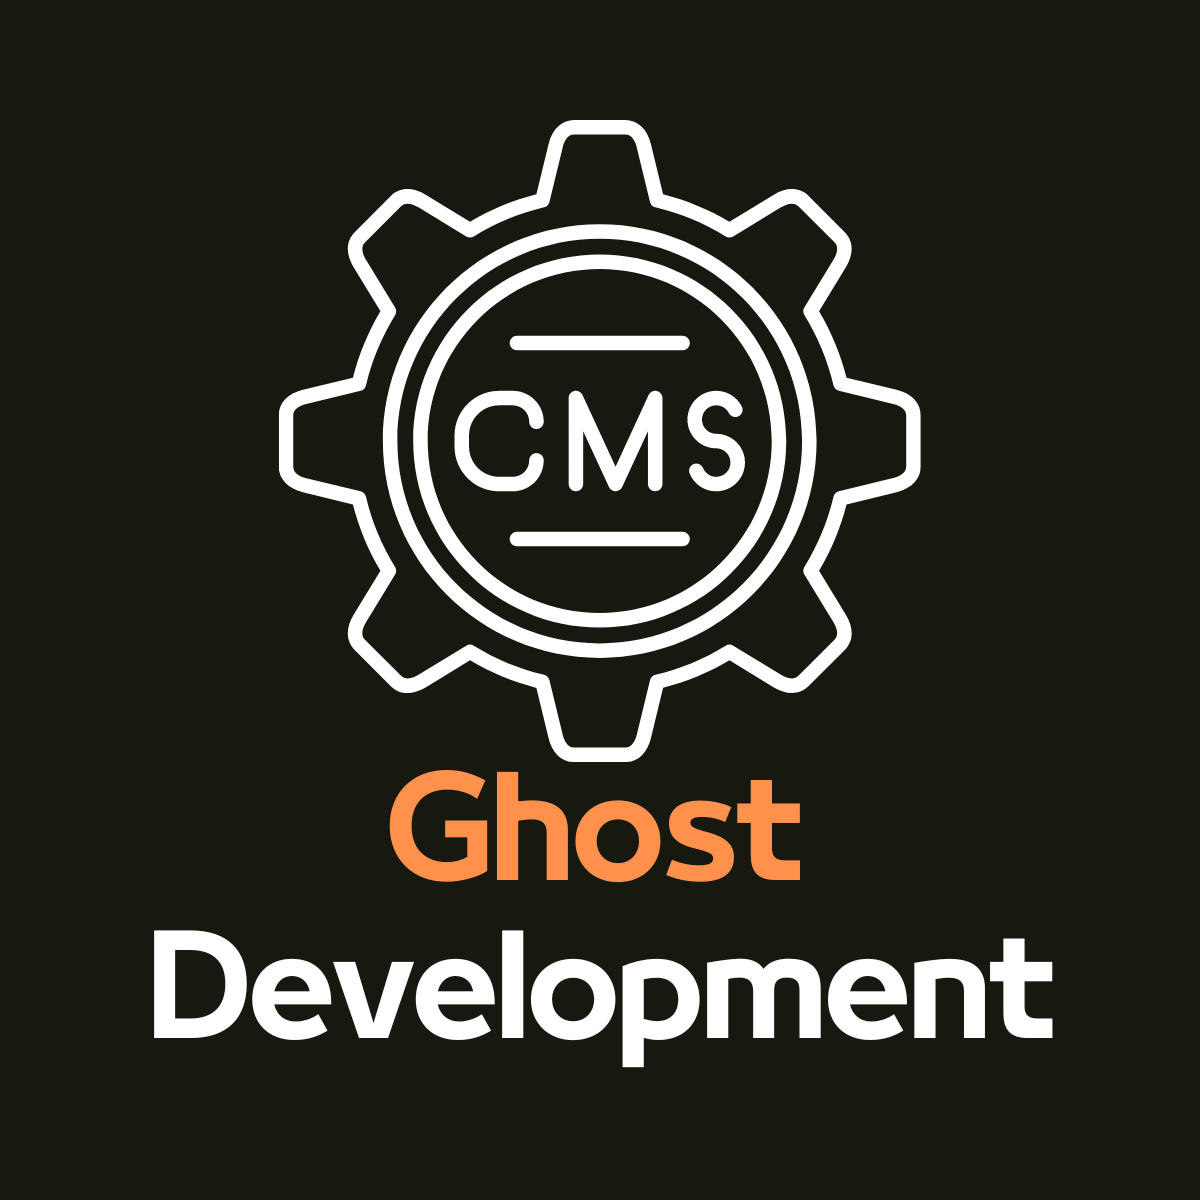 Ghost Development